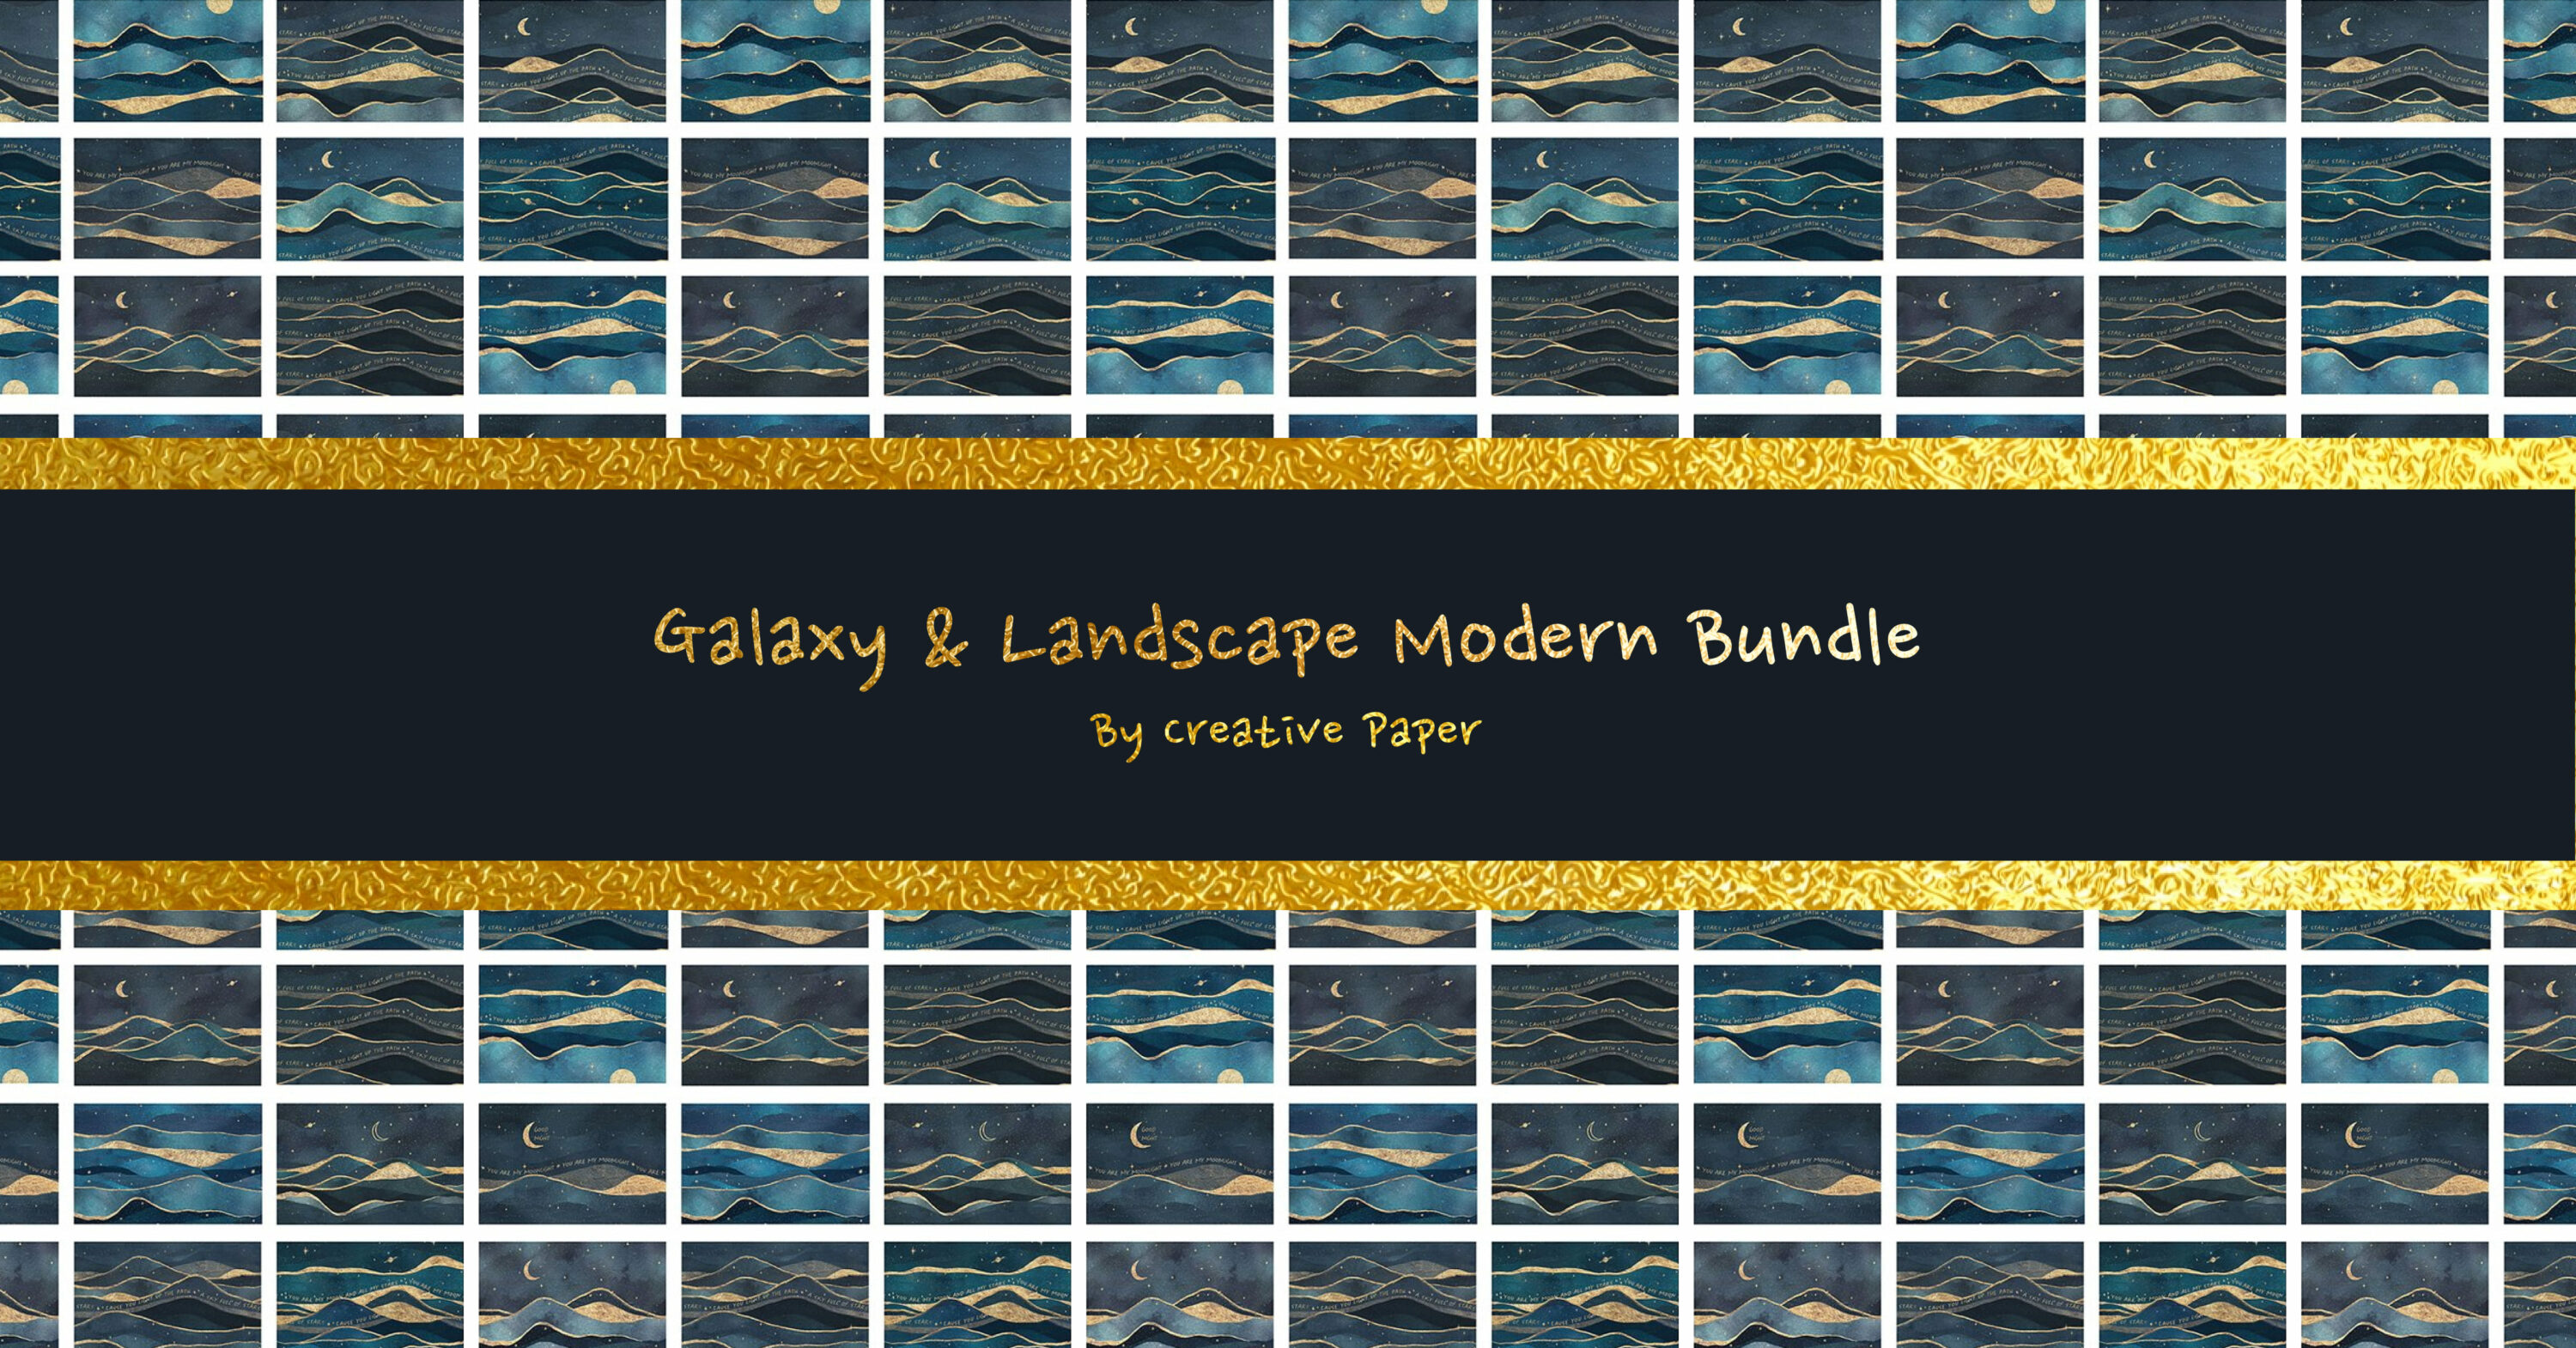 Galaxy & Landscape Modern Bundle facebook image.